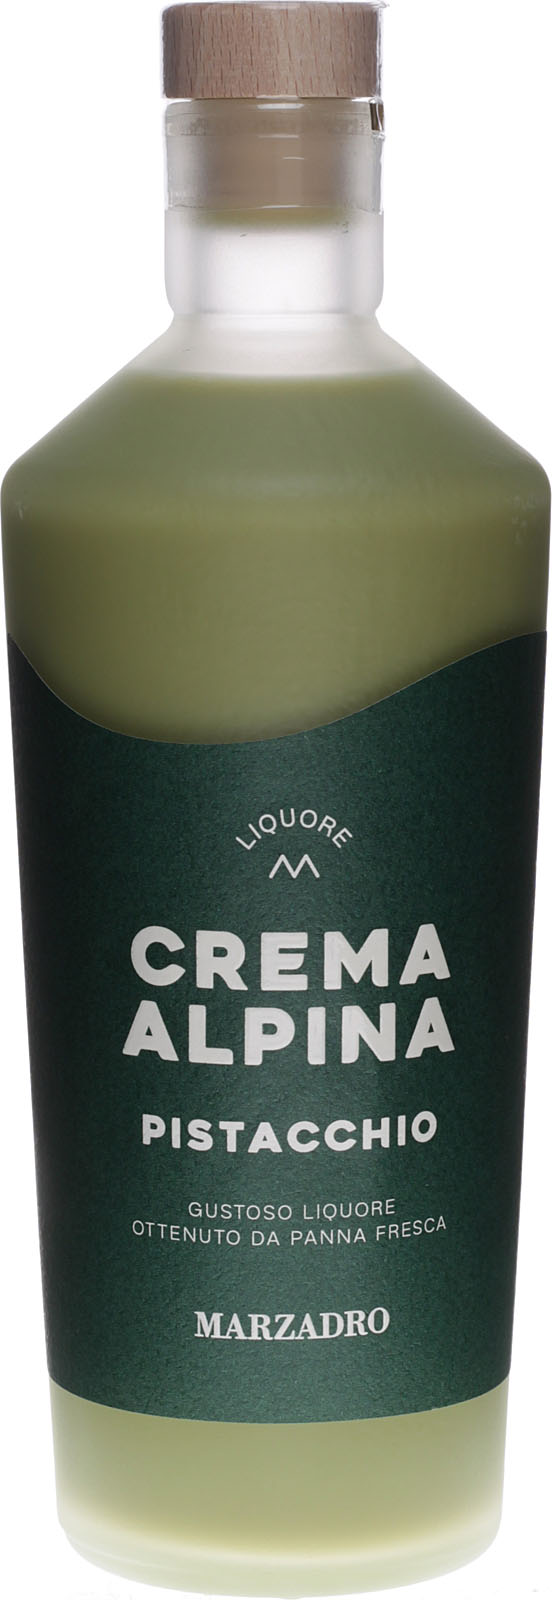 Marzadro Crema Alpina Pistacchio Liter bei uns kauf 0,7